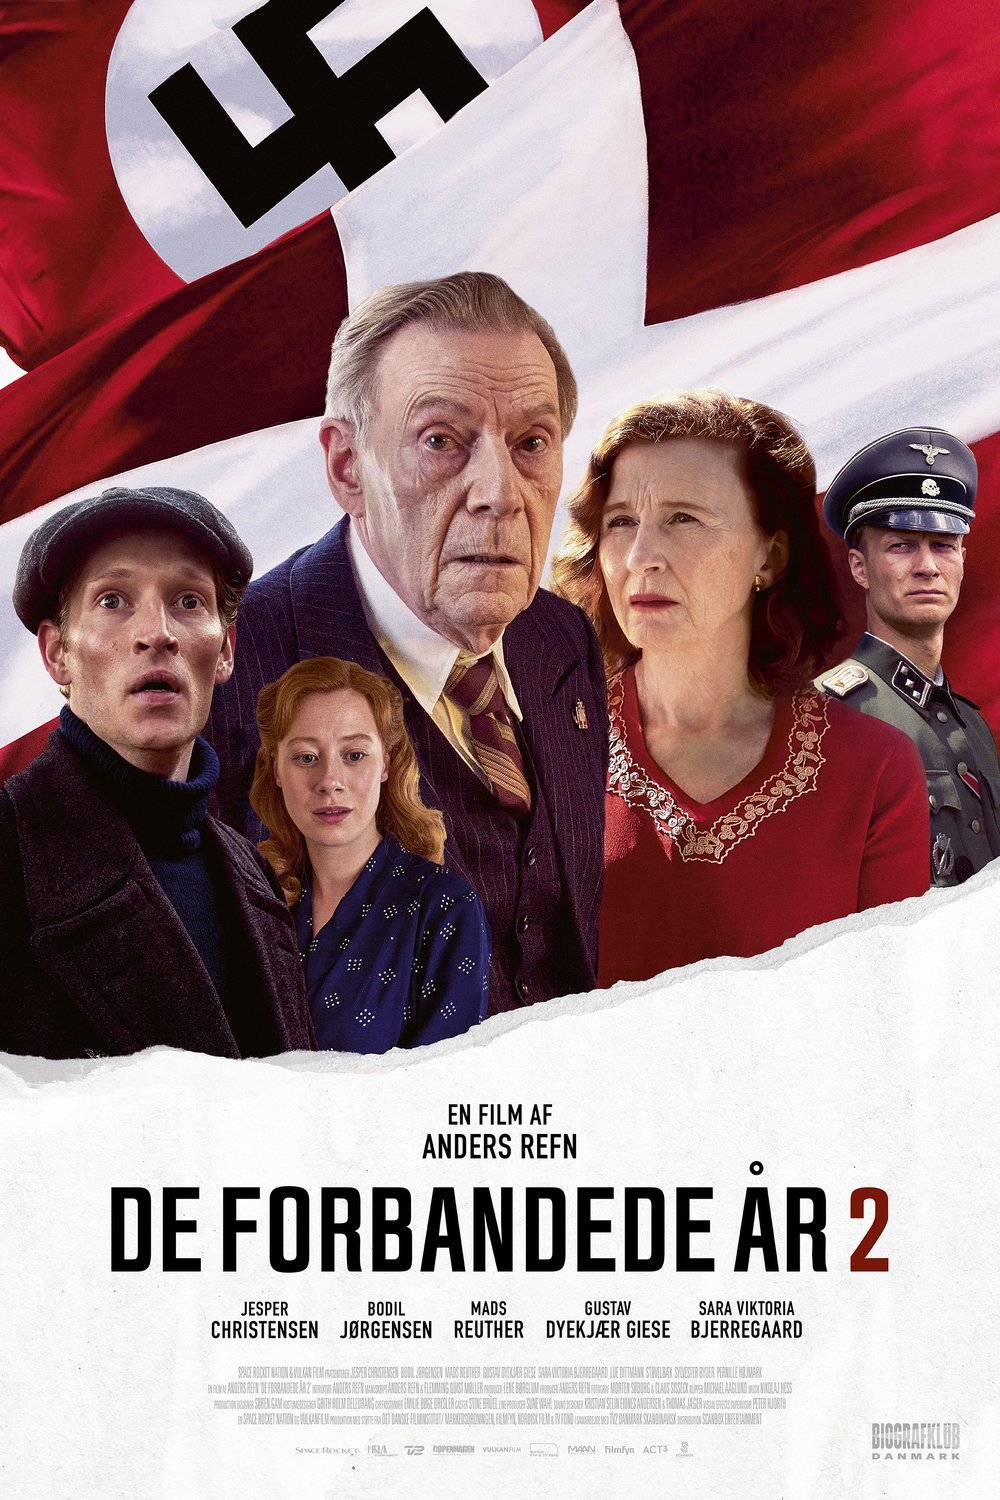 L'affiche originale du film De forbandede år 2 en danois